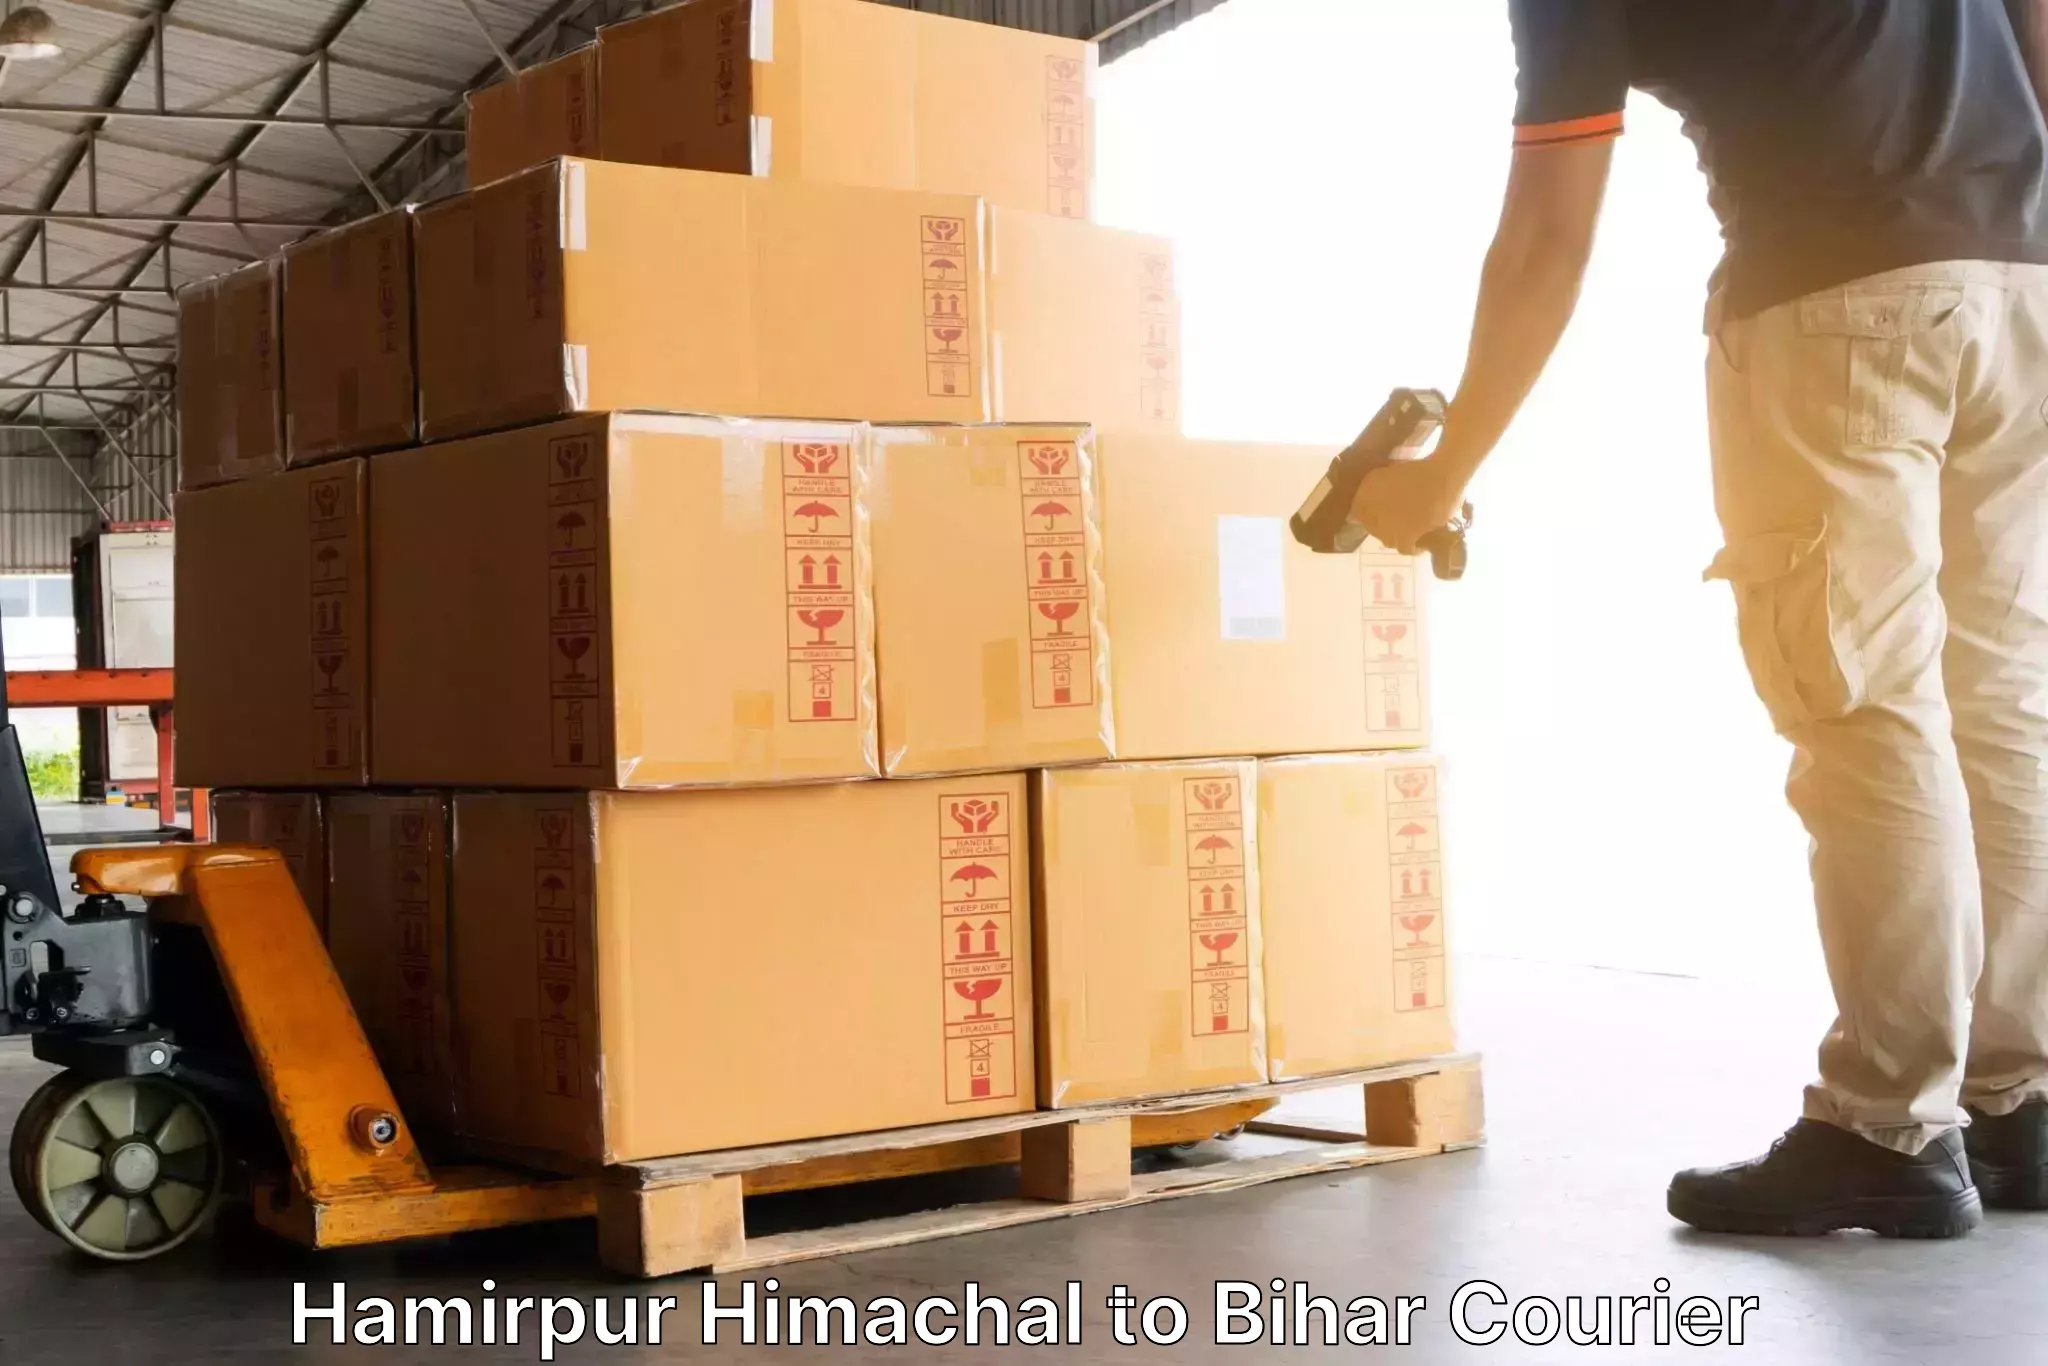 Delivery service partnership Hamirpur Himachal to Aurai